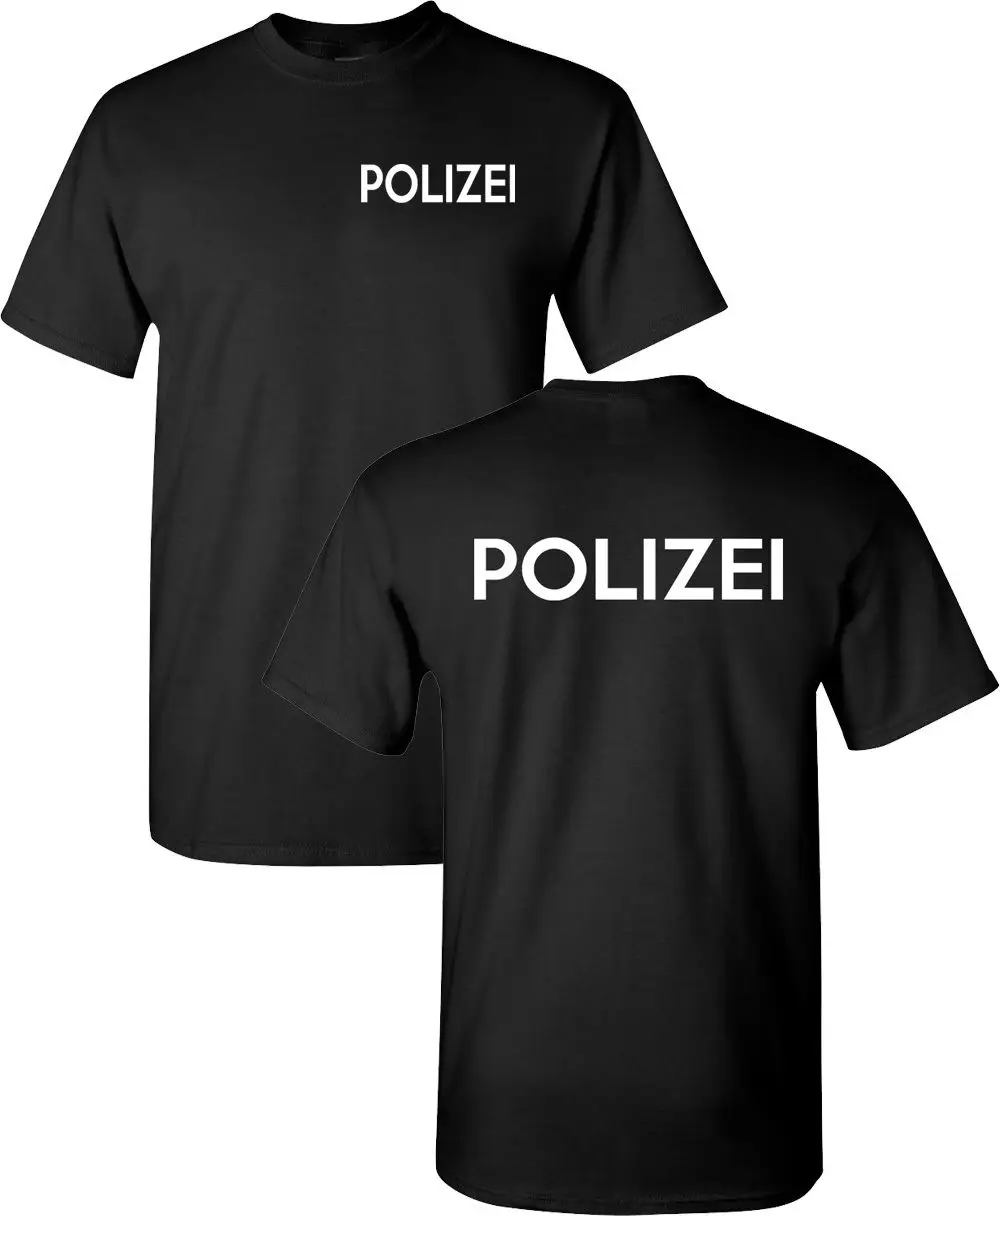 2019 Fashion Cotton T-shirt Polizei German Police Shirt Print Front & Back Men's Tee Shirt 1620